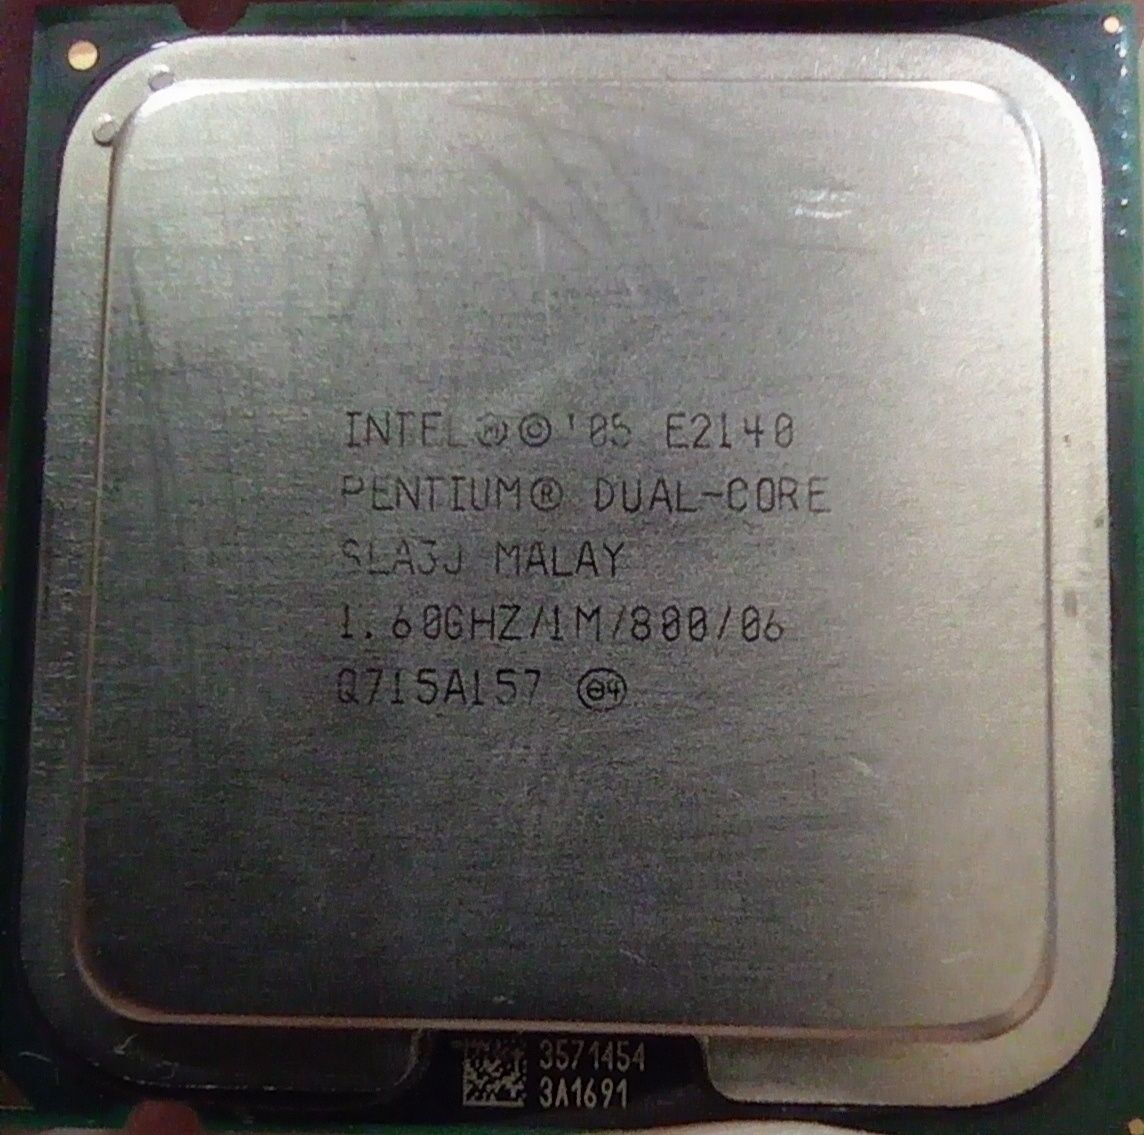 Процессор Intel Pentium Dual-core
П
PENTIUMO DUAL-CORE

SLAJU MALAY

1